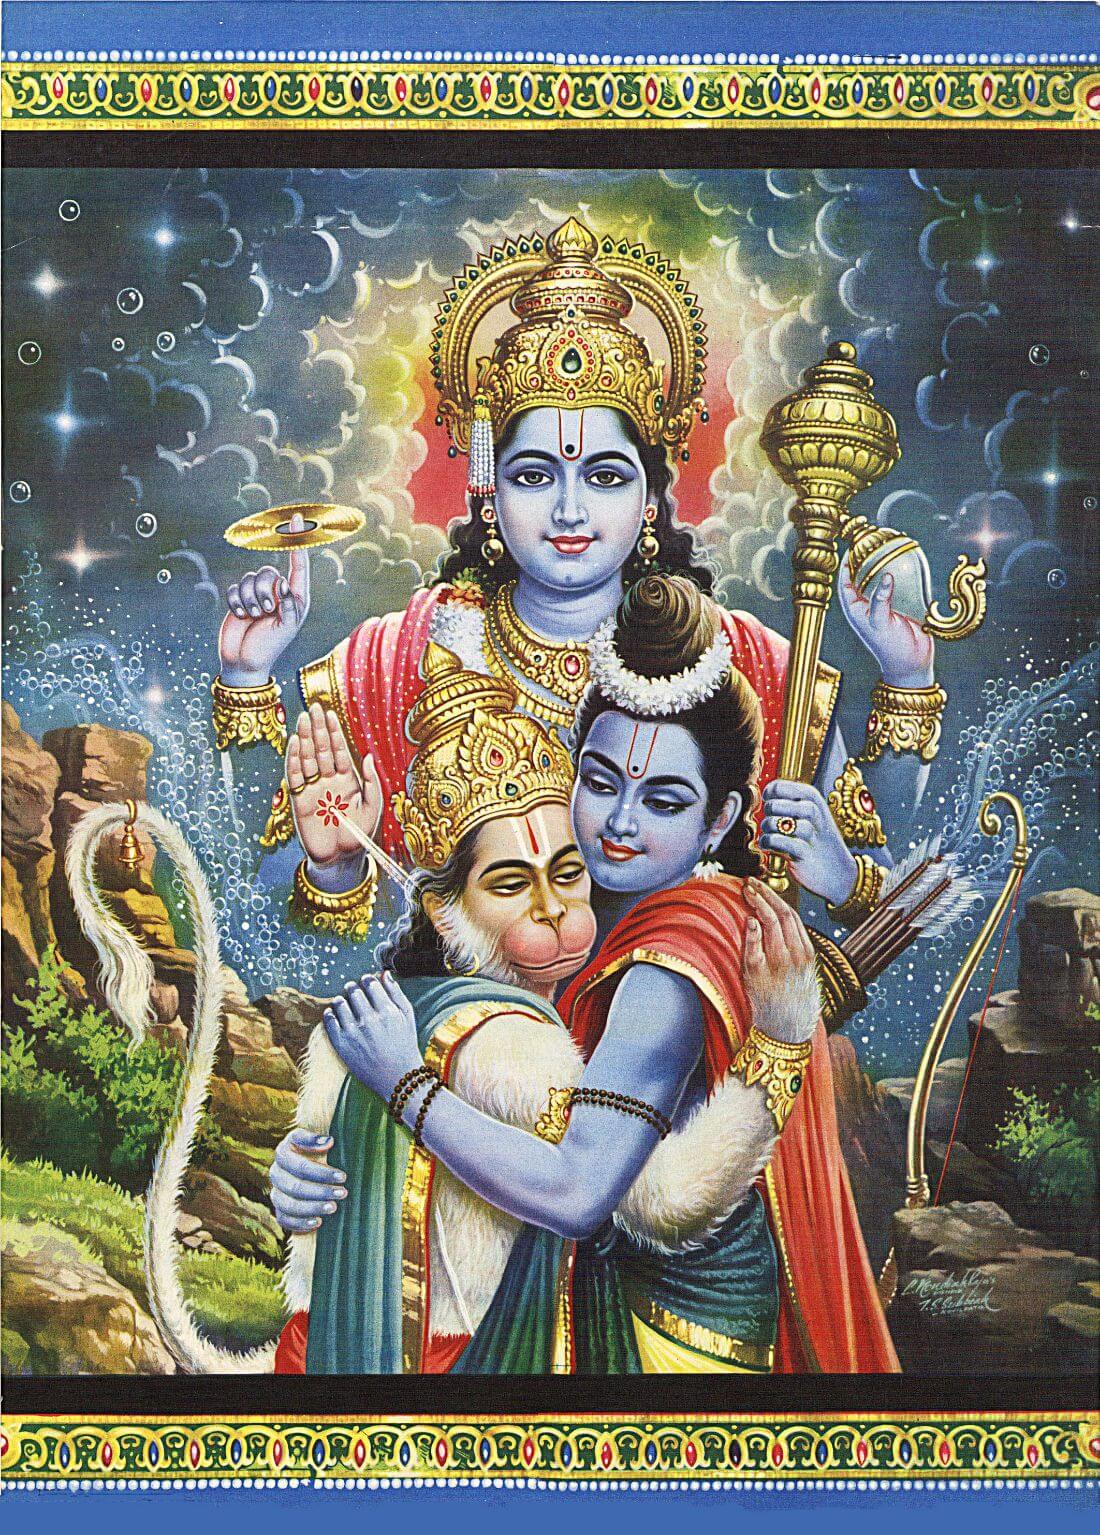 Ram Hanuman Milan (Vishnu Avatar) - Ramayan Art Painting - Posters ...